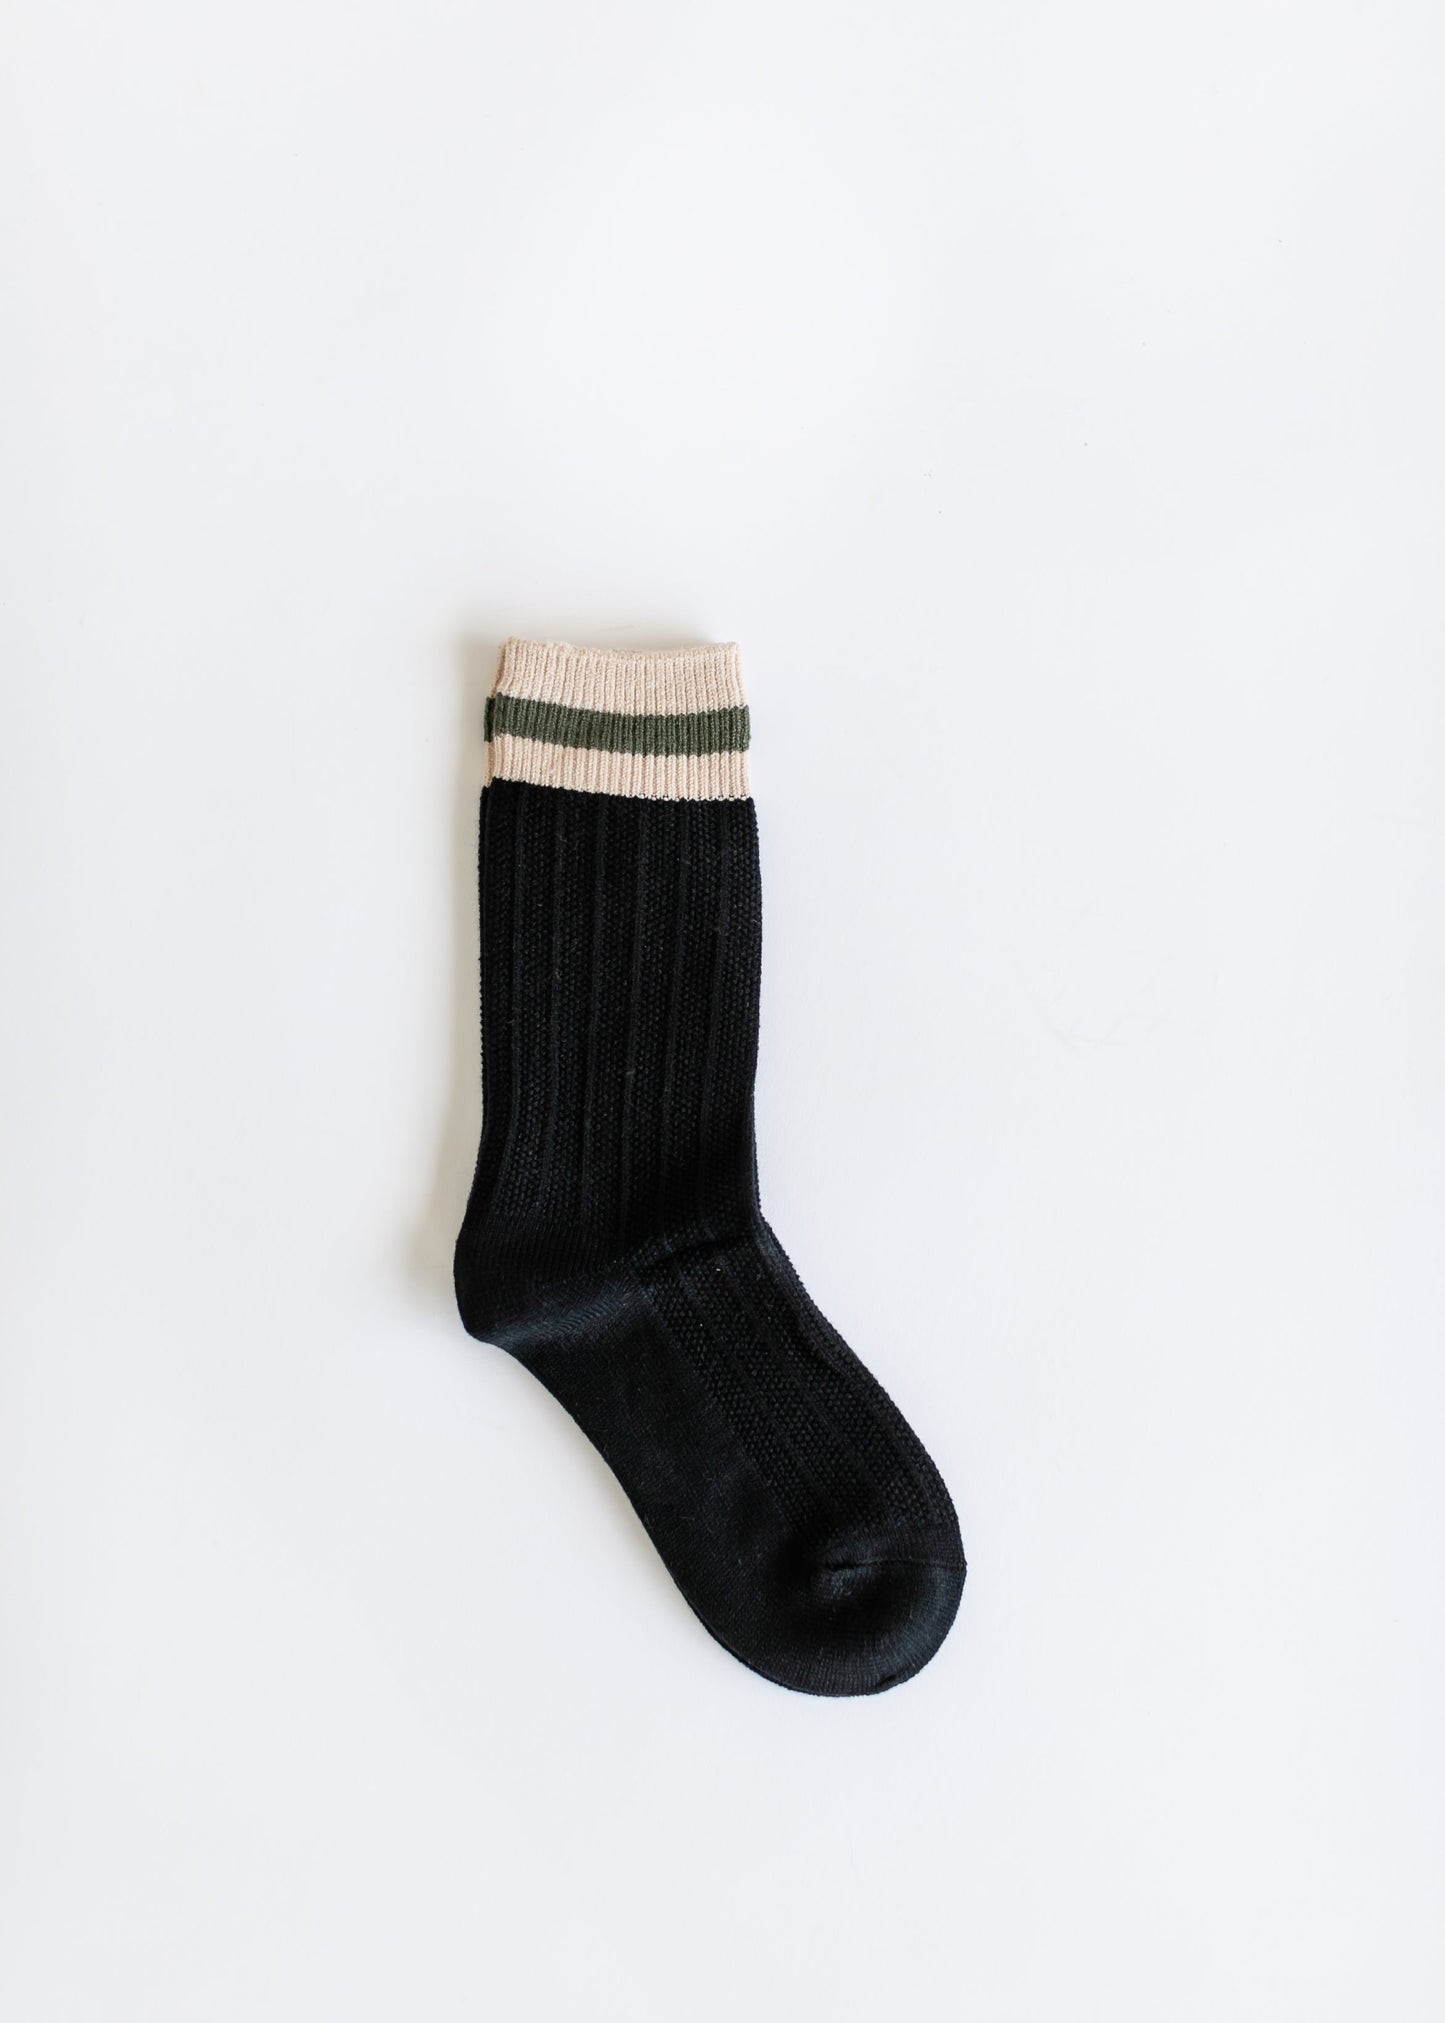 Colorblock Calf Socks Accessories Black